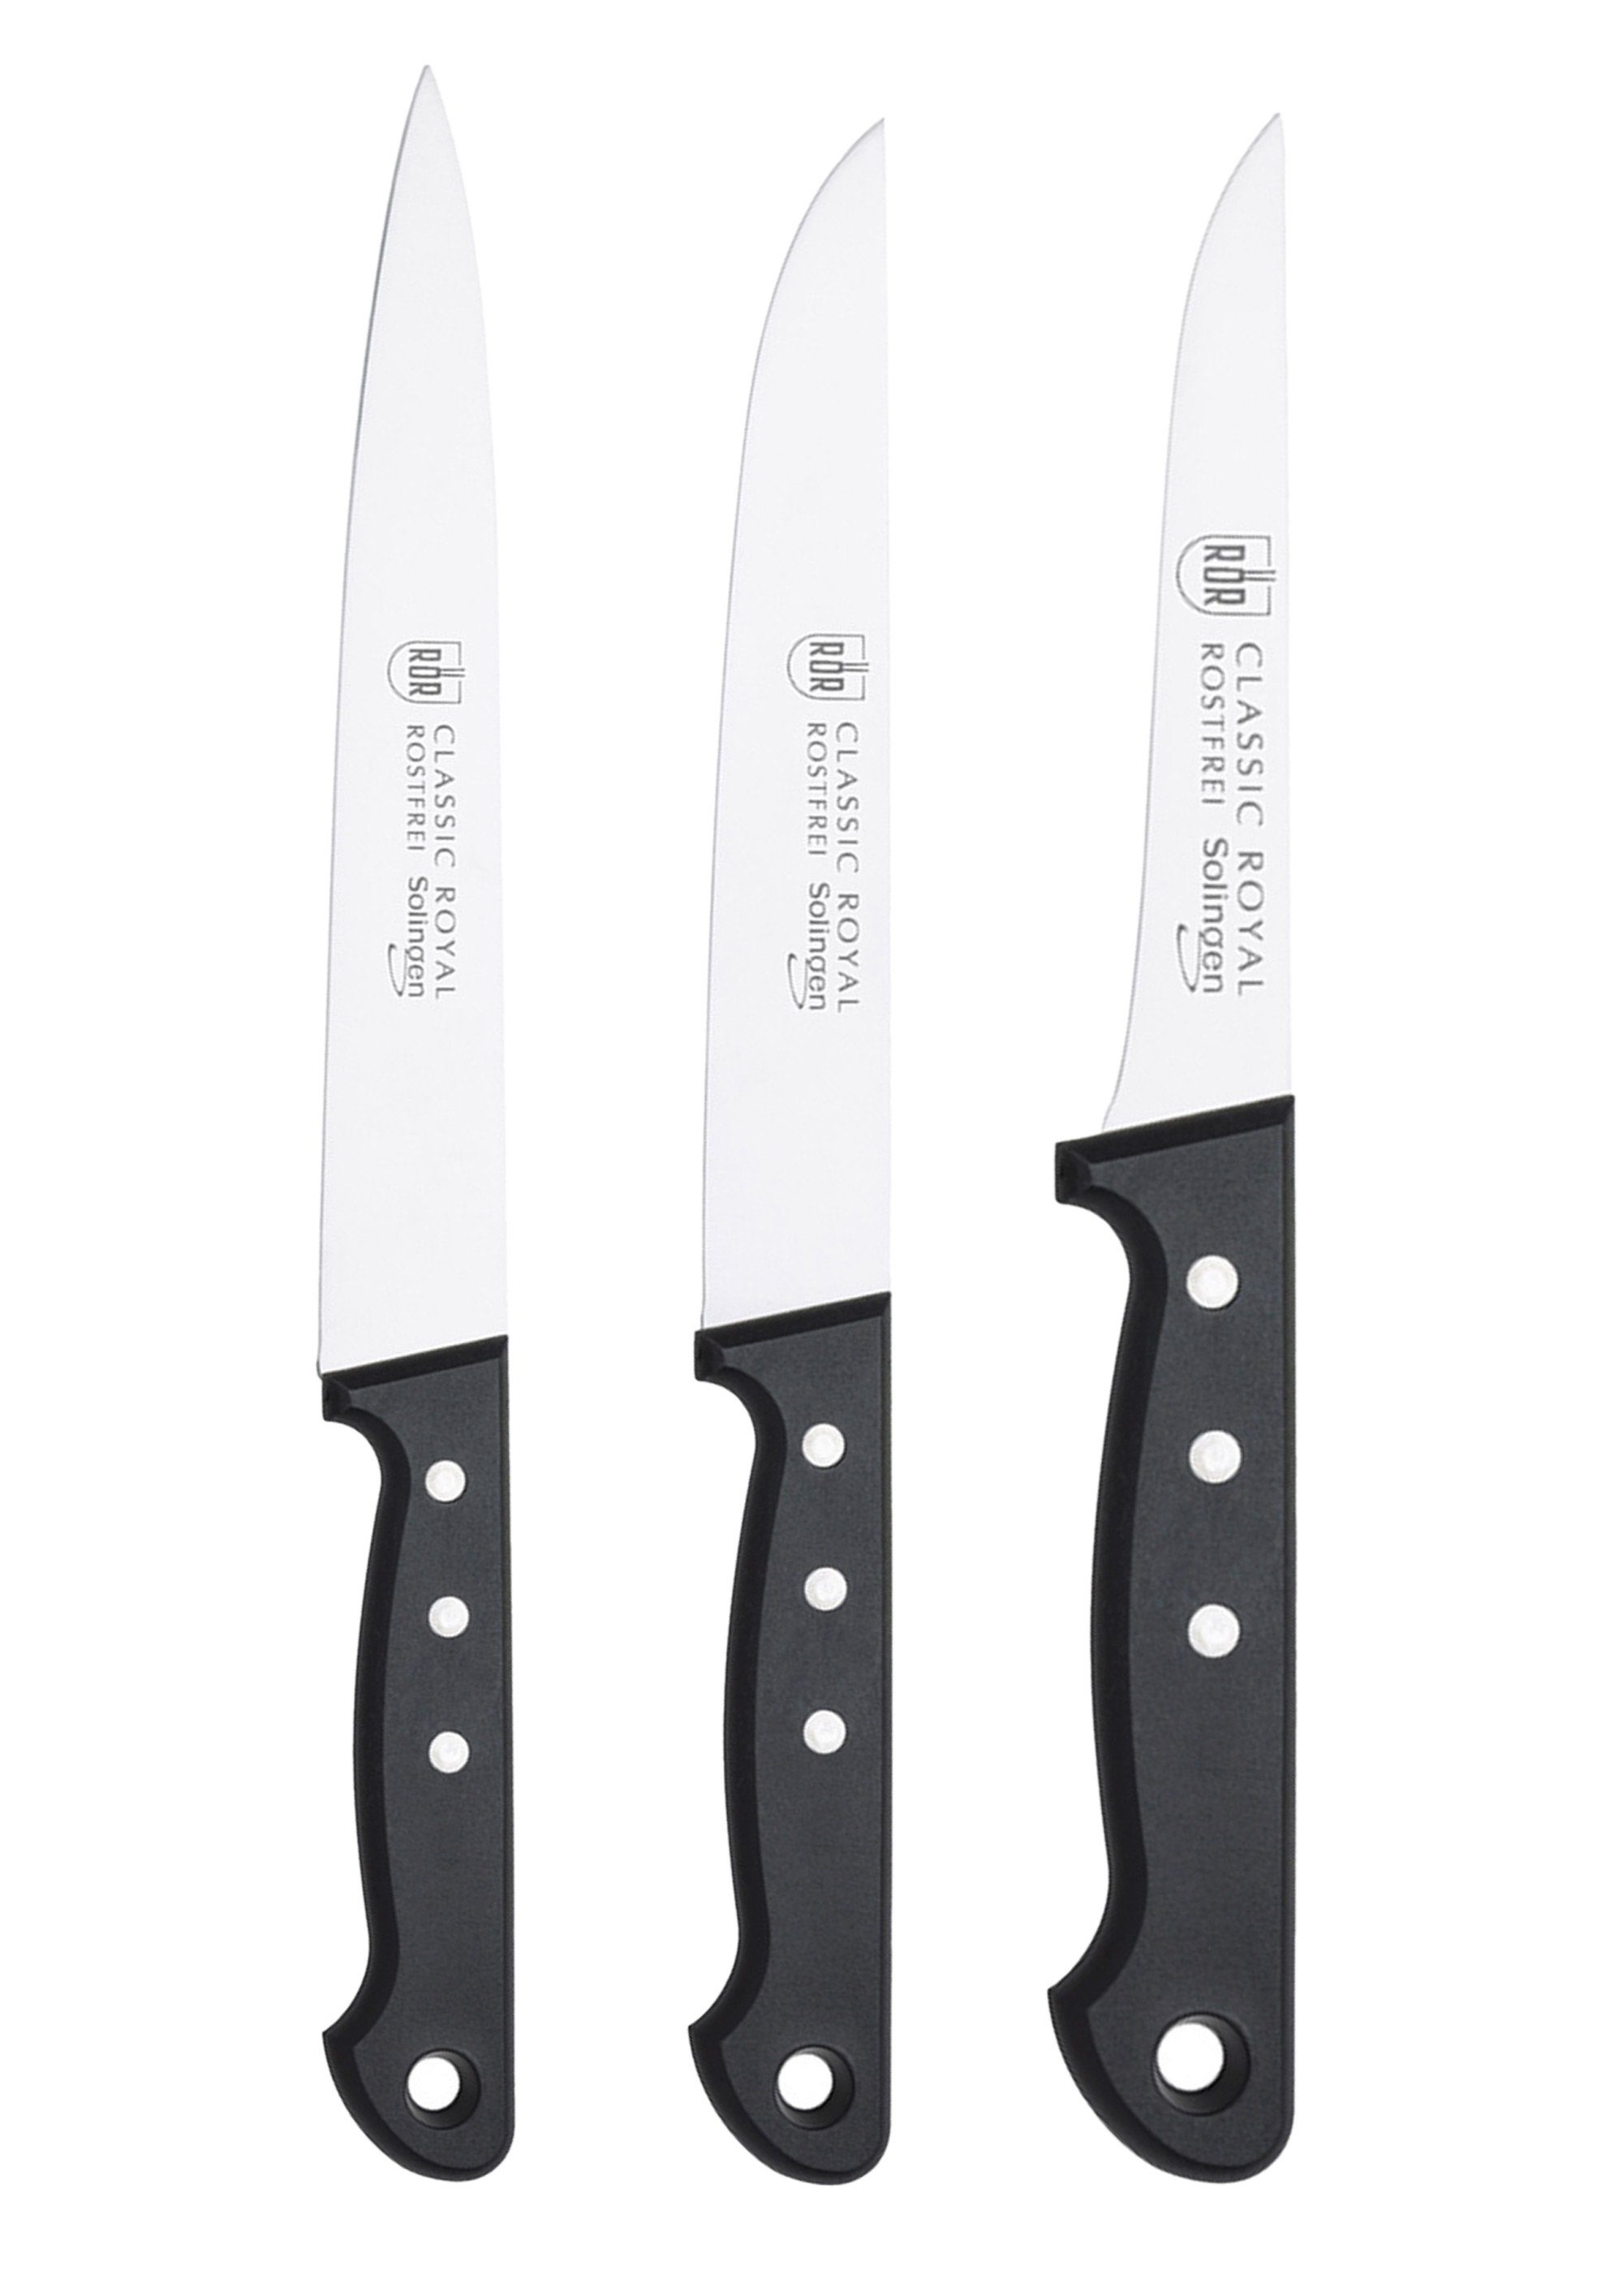 RÖR Messer-Set 10267-3, Classic Royal Fleischset - 3-tlg. Messerset -, schwarzer Kunststoffgriff mit Nieten - Made in Solingen